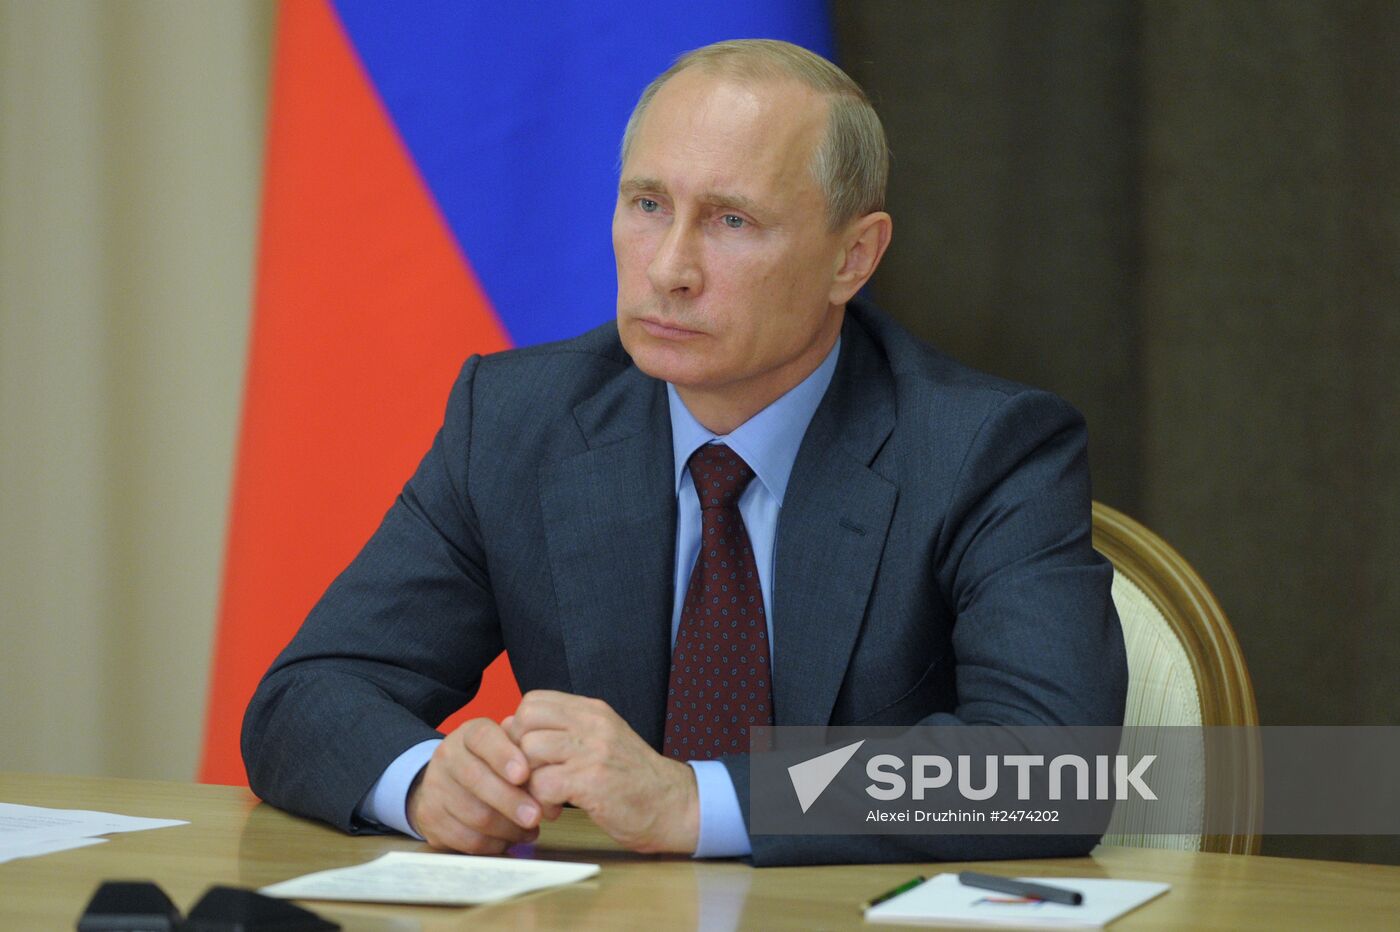 Putin kicks off trial boring at West Alpha oil rig in the Sea of Kara